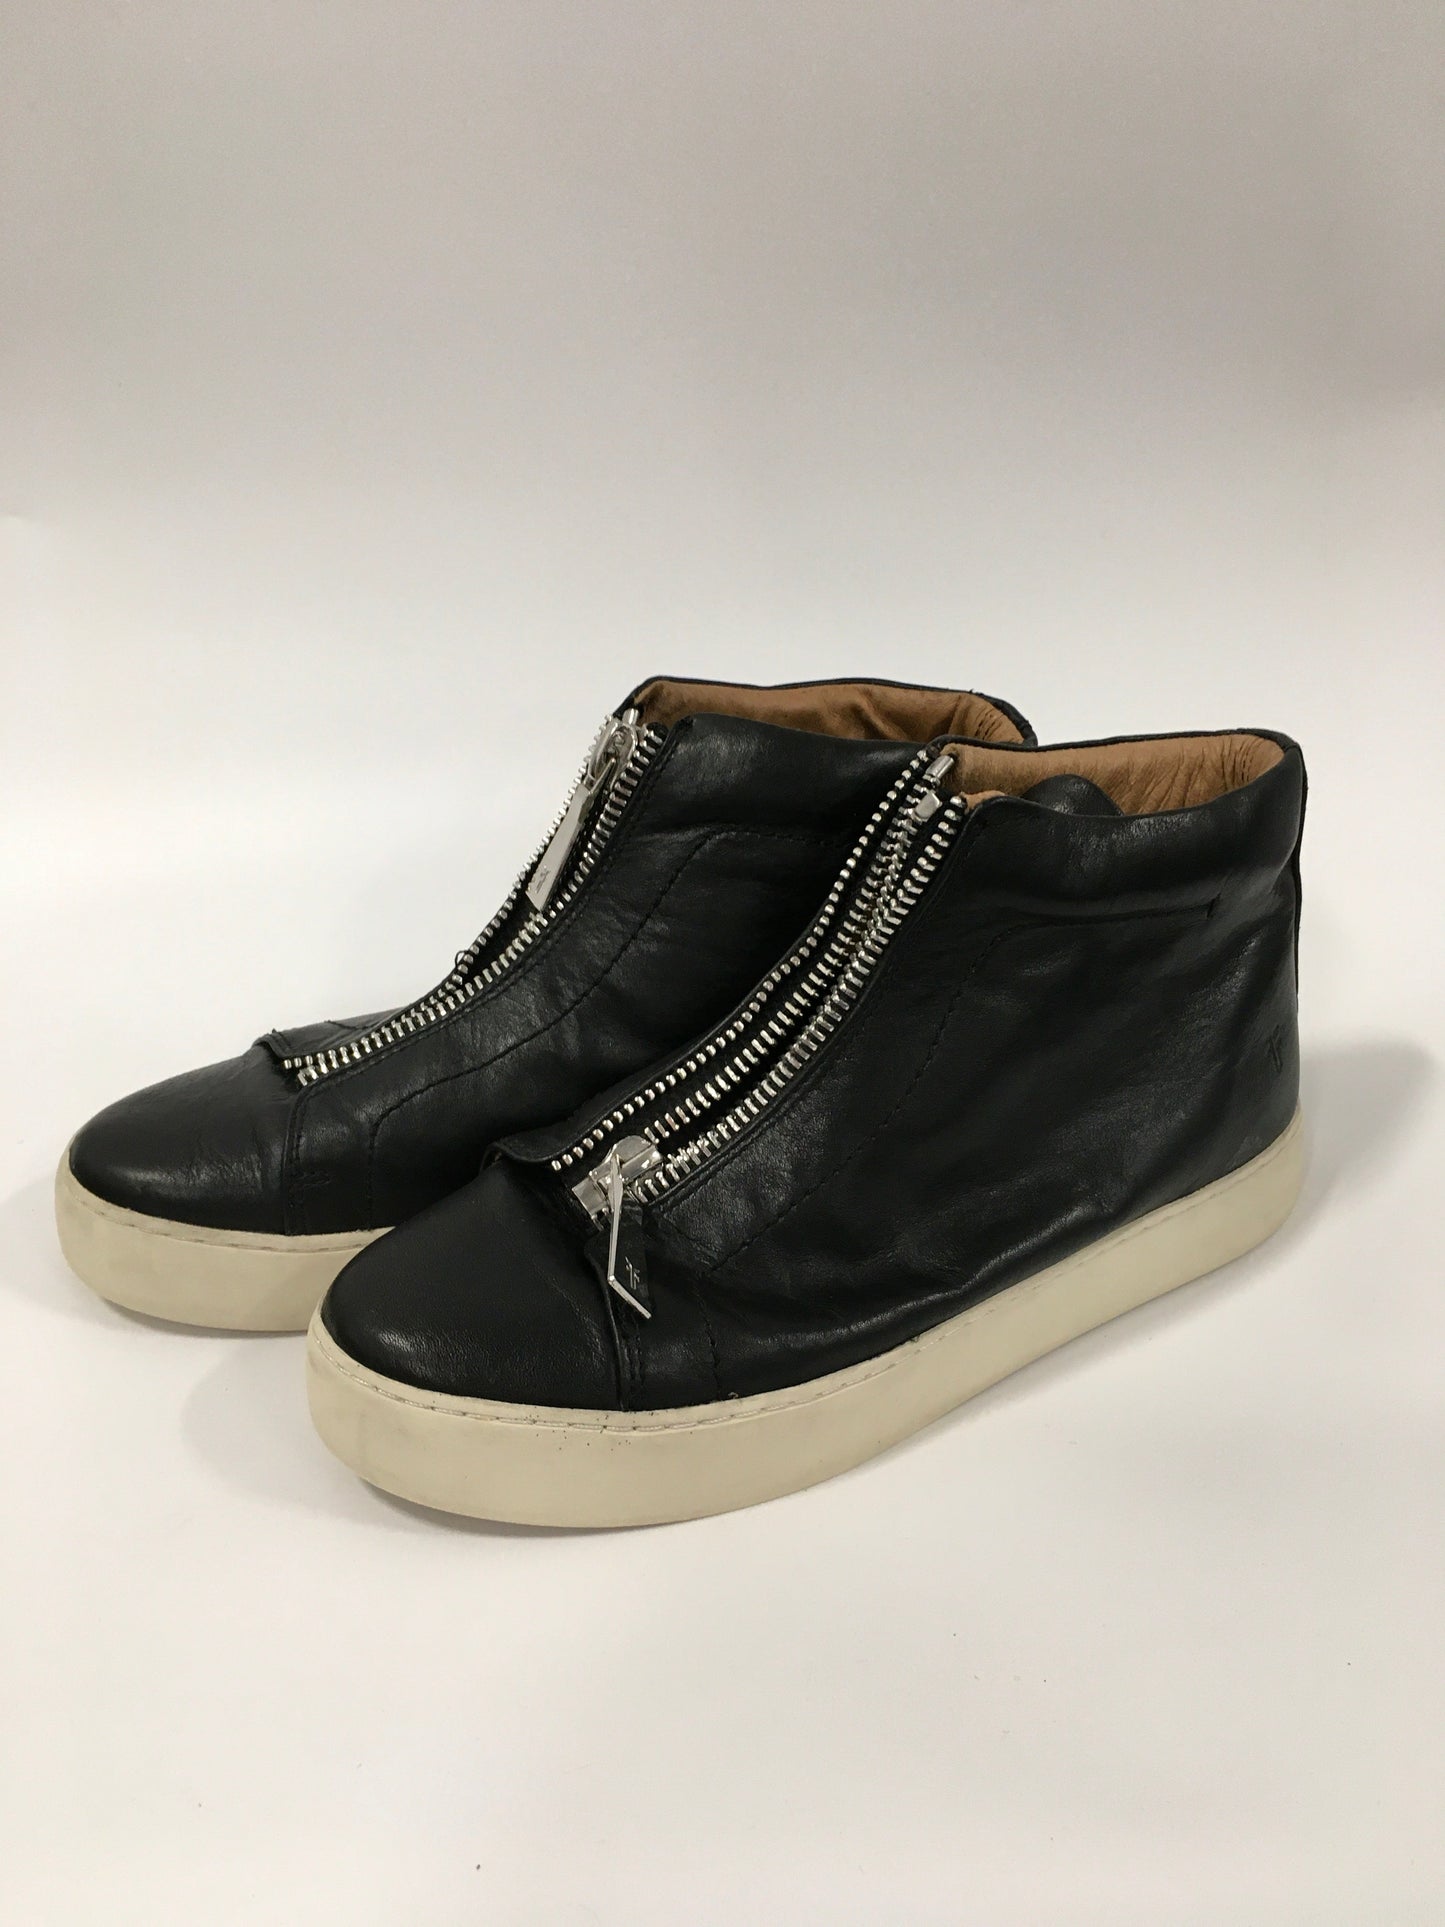 Black Shoes Sneakers Platform Frye, Size 8.5